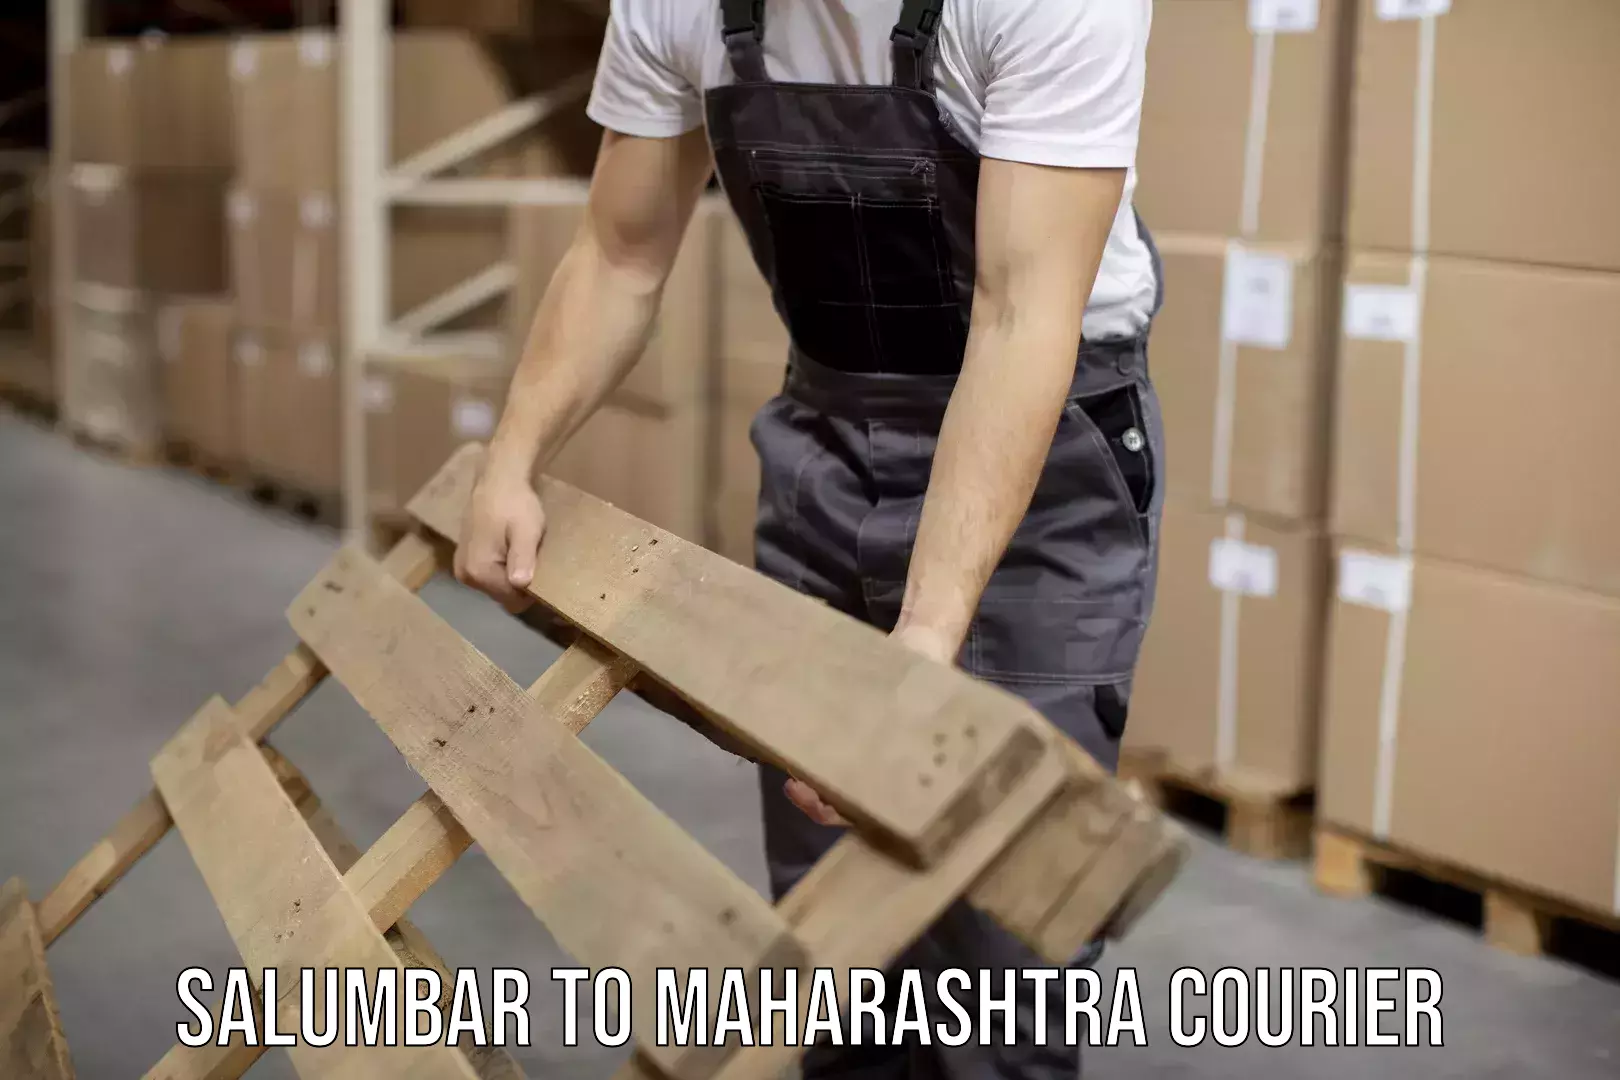 Pharmaceutical courier Salumbar to Maharashtra